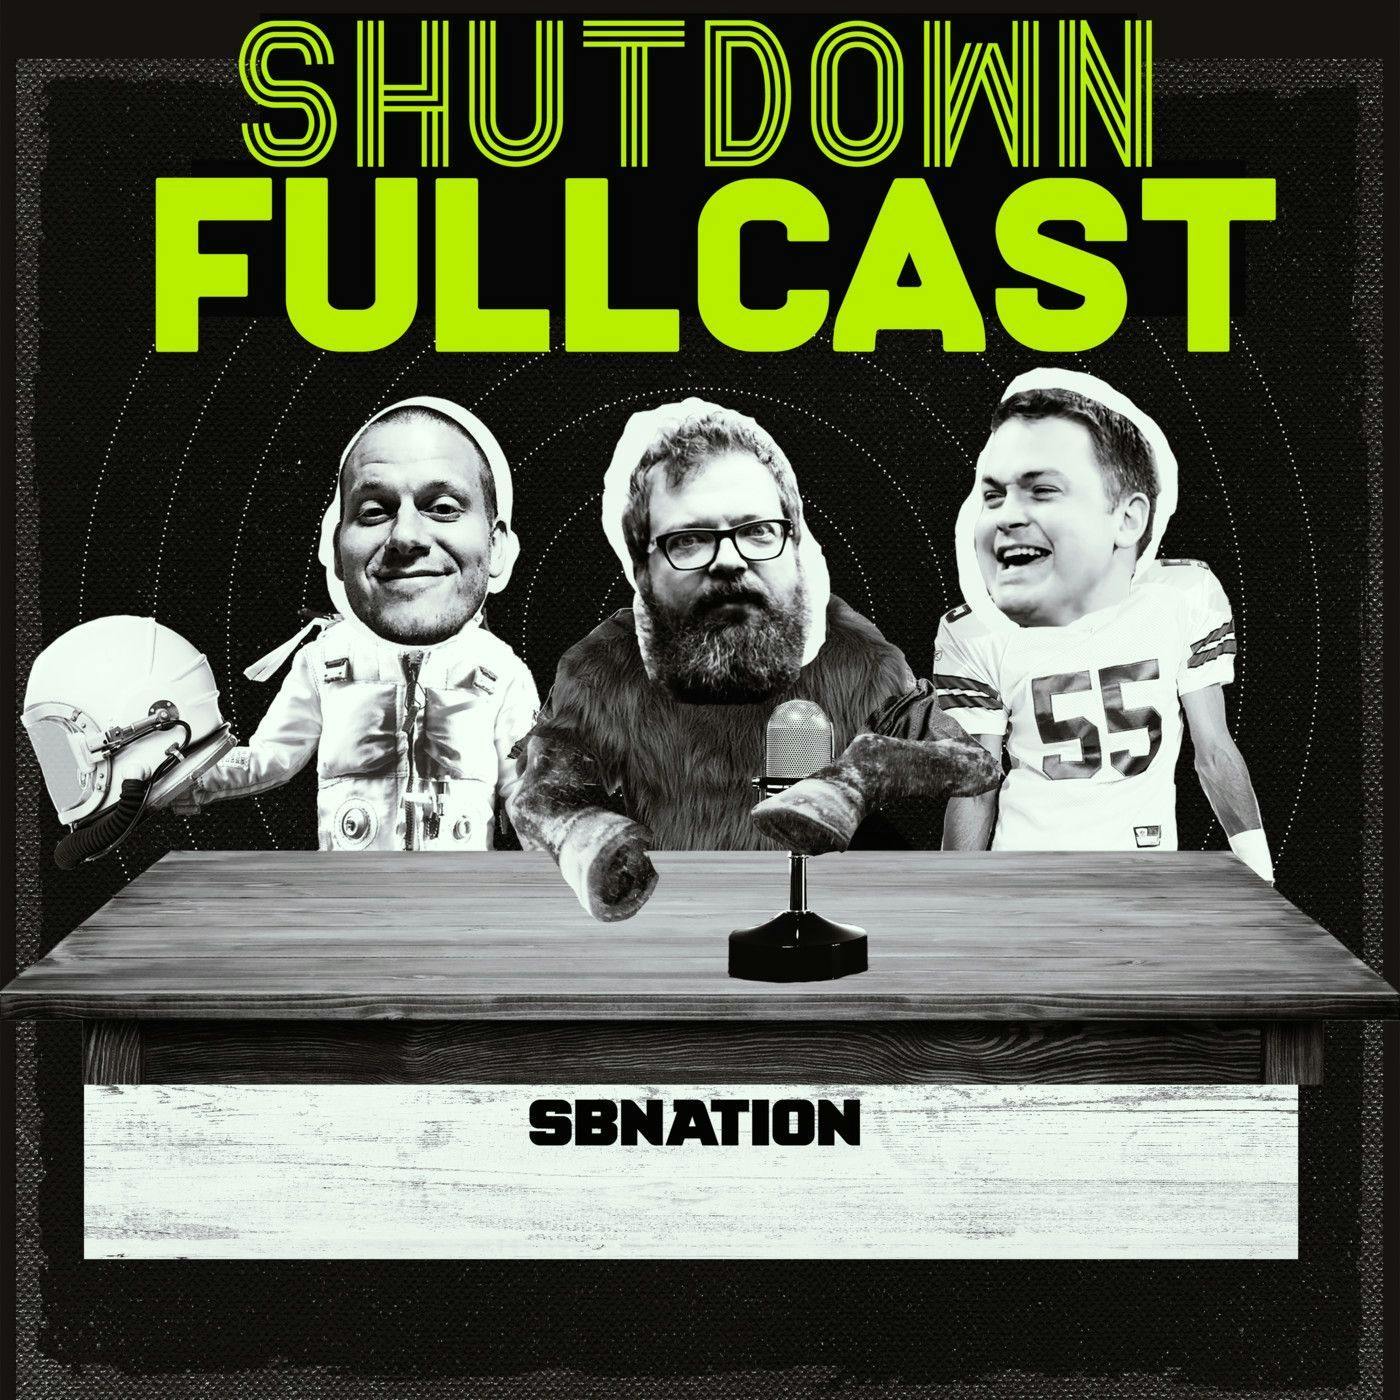 Shutdown Fullcast 40 for 40: The 2017 Cure Bowl